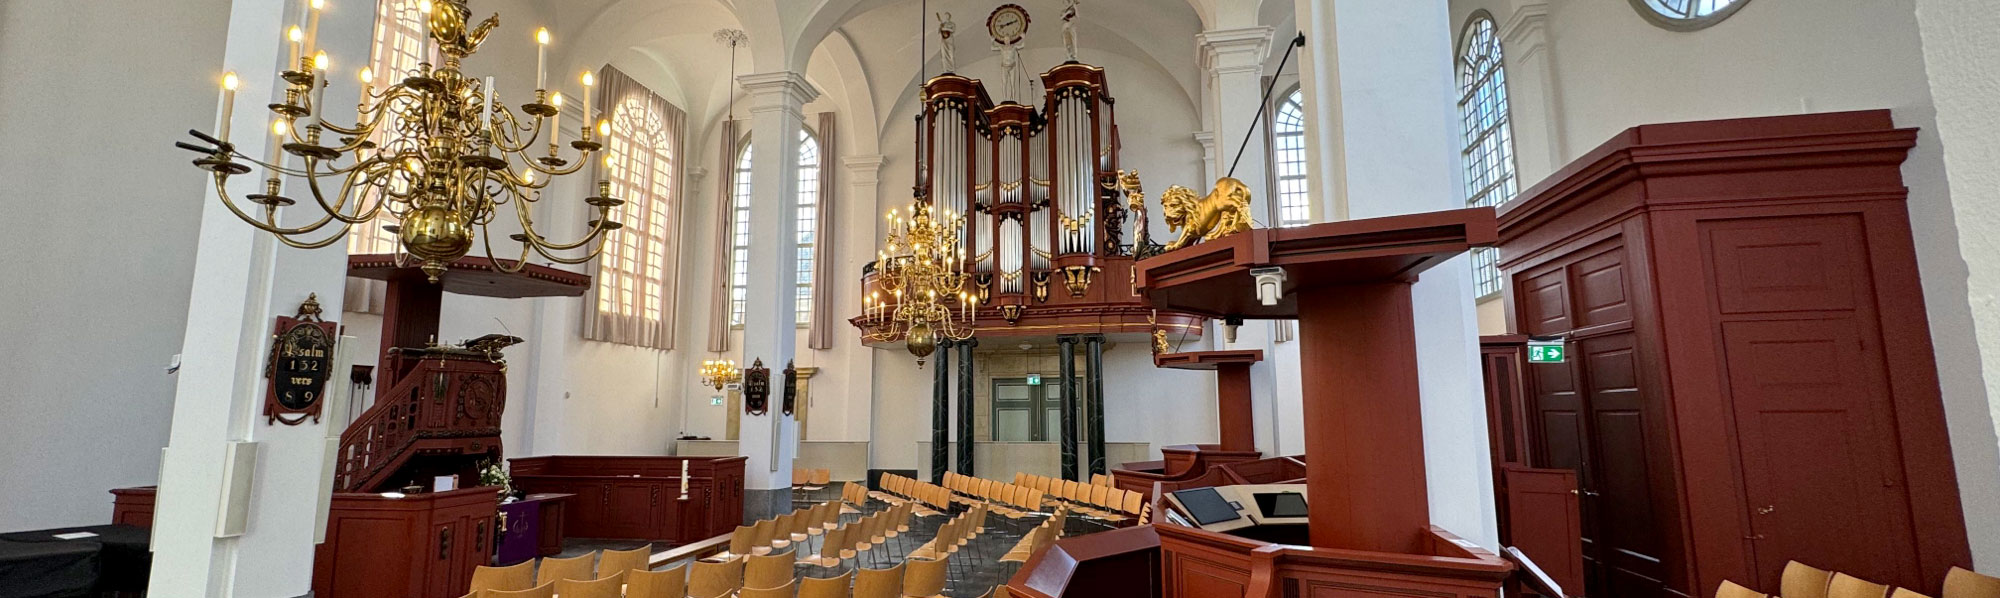 Orgel Oude Kerk